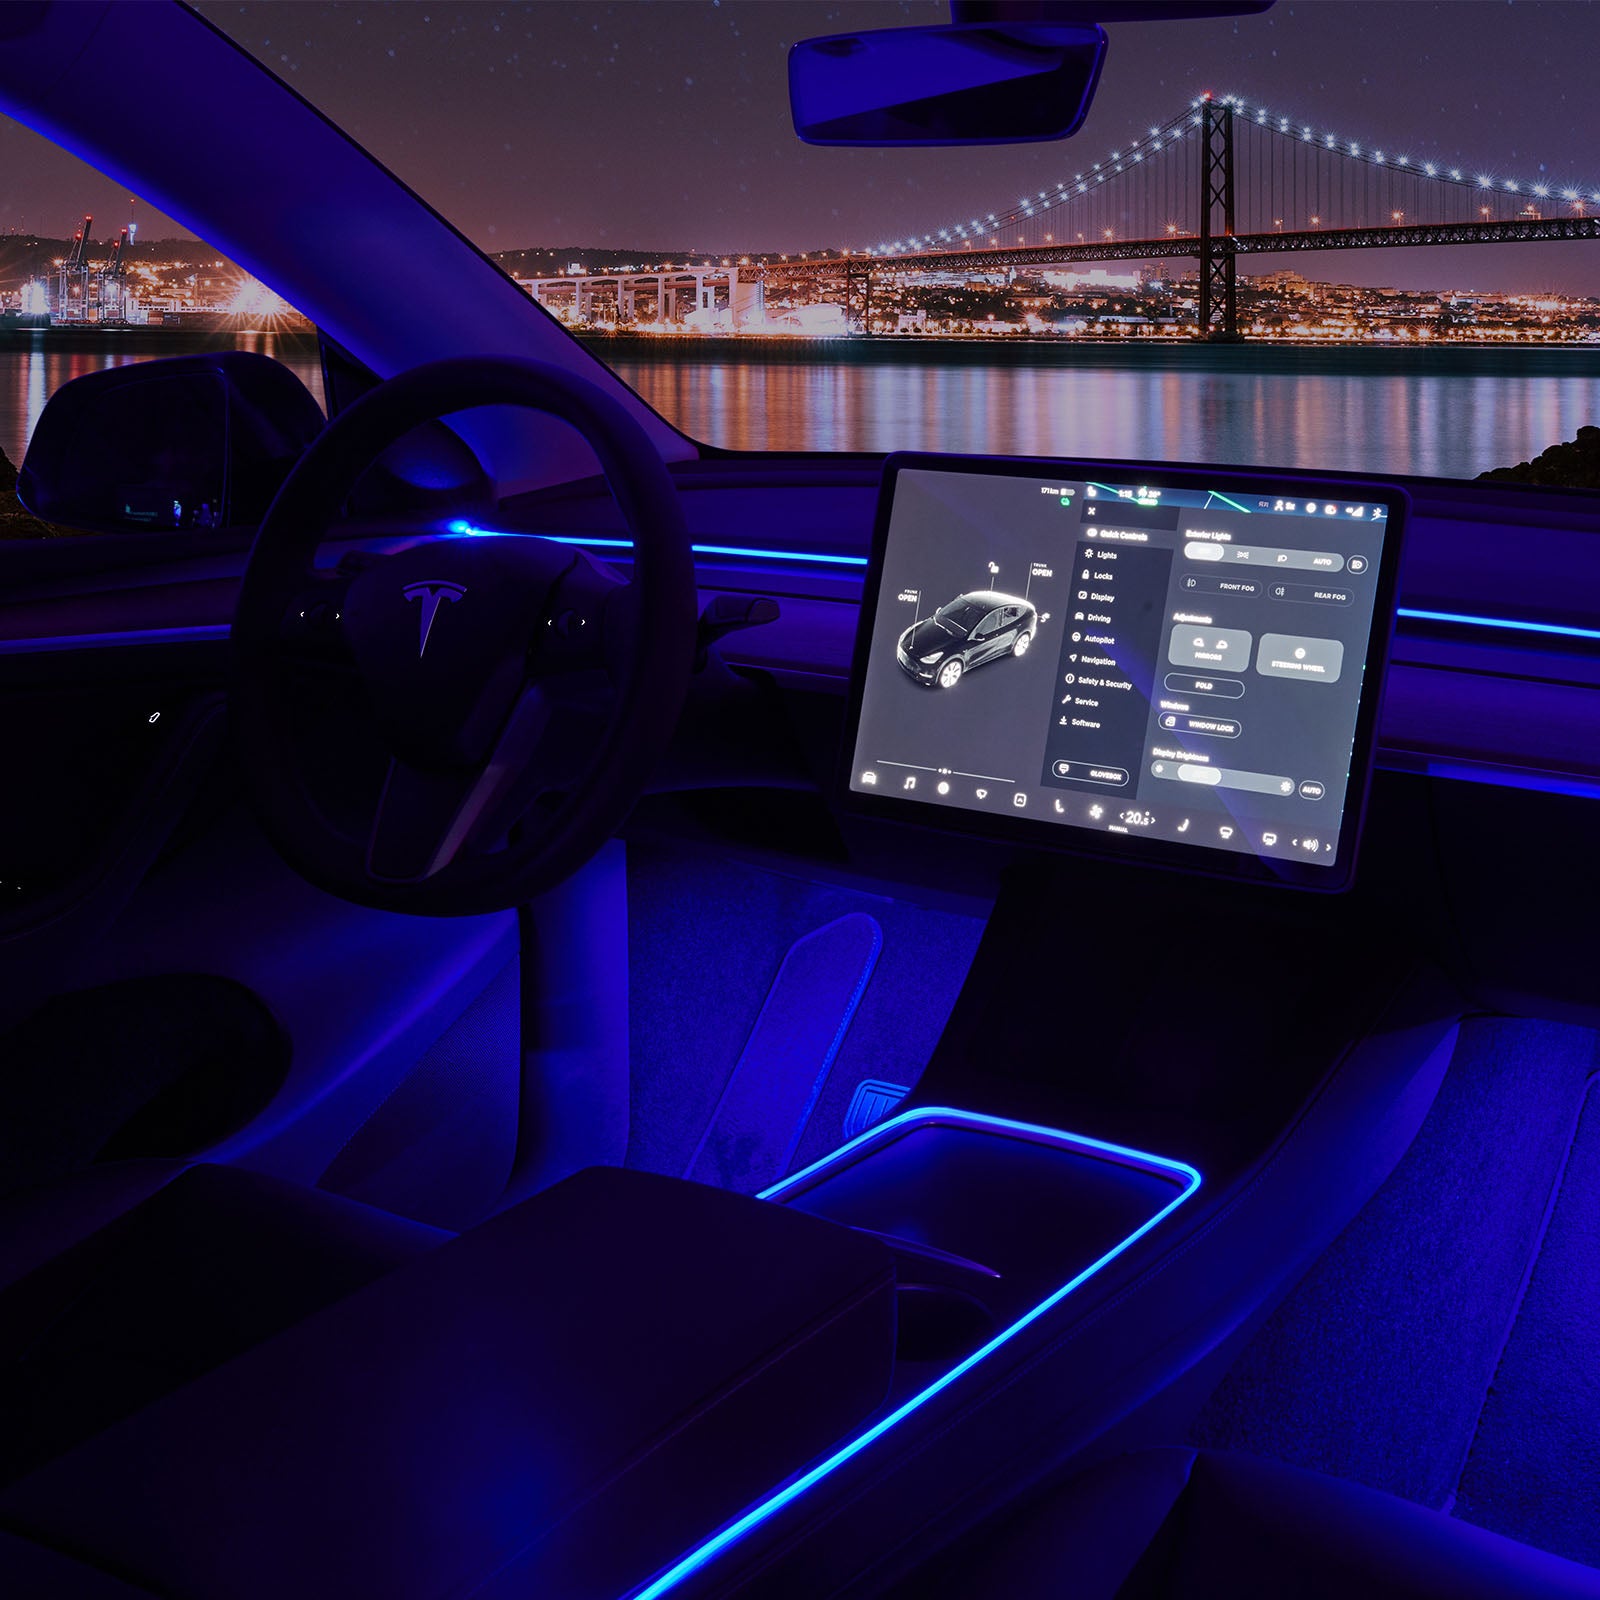 purple interior car lights